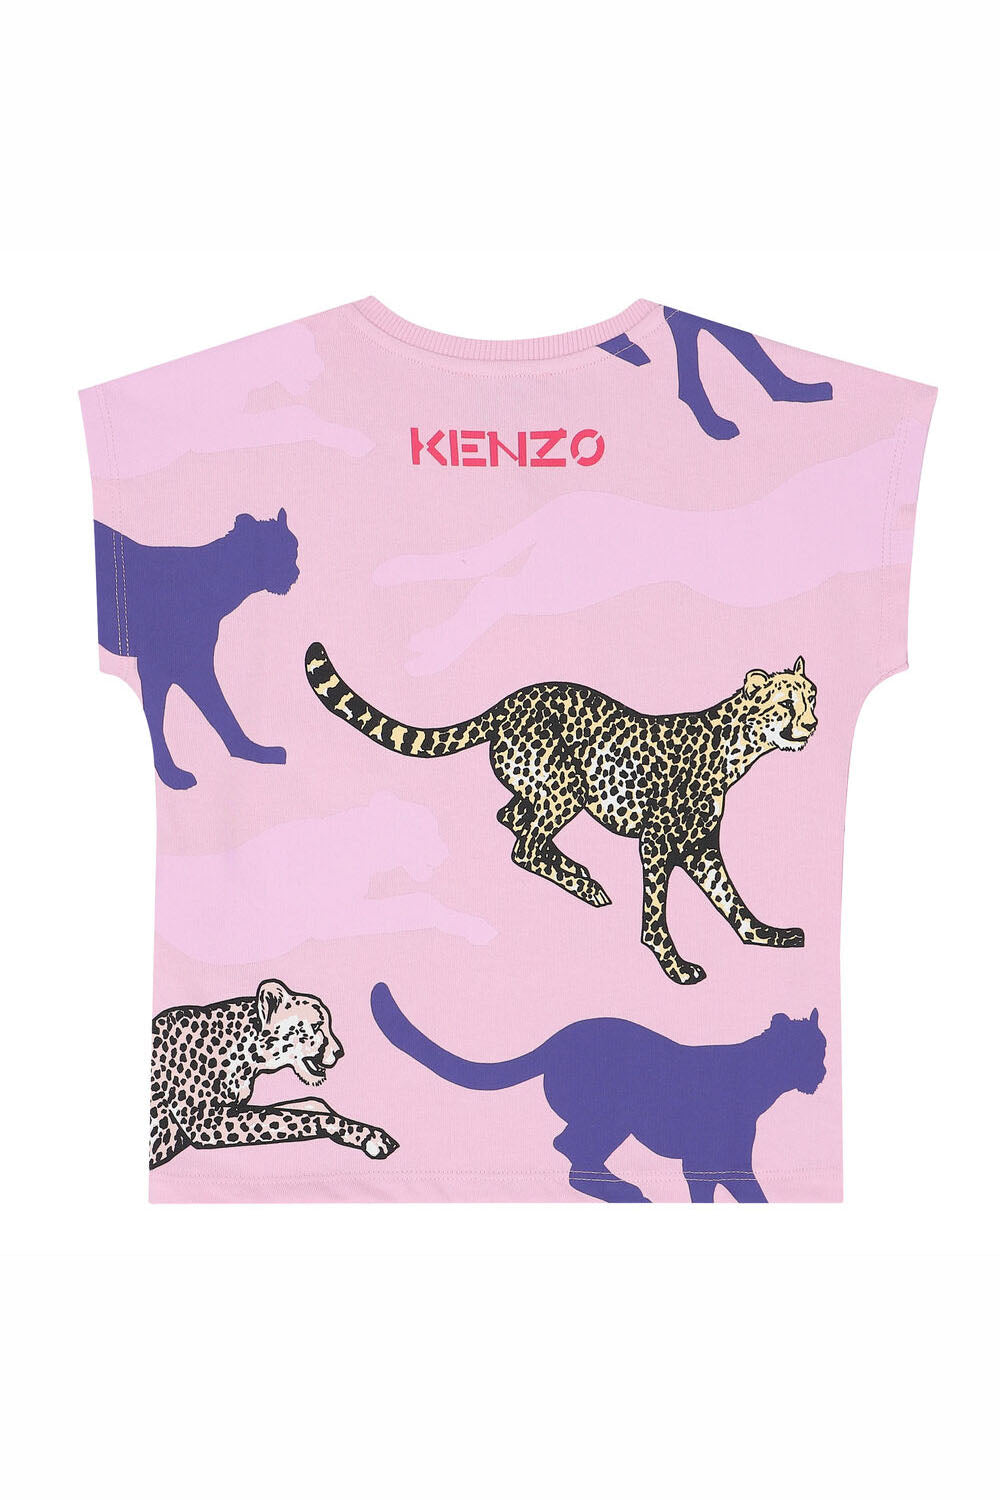 Cheetah print Tee-Shirt for Girls - Maison7